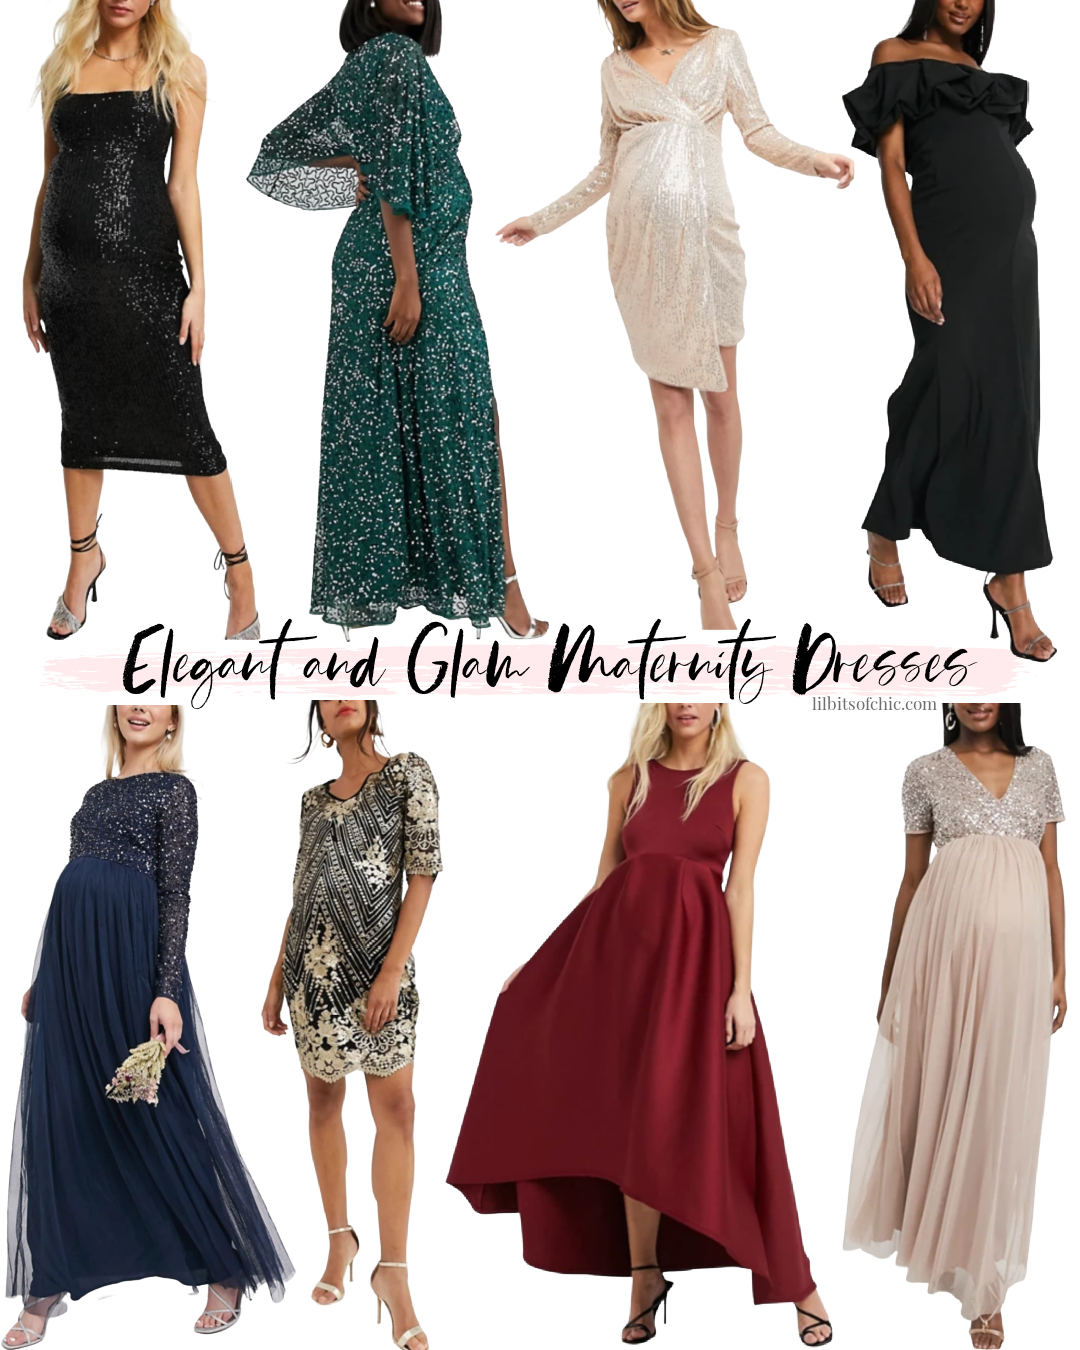 Elegant and Glam Maternity Dresses, Dresses for maternity photoshoot, wedding guest maternity dresses, baby shower dresses